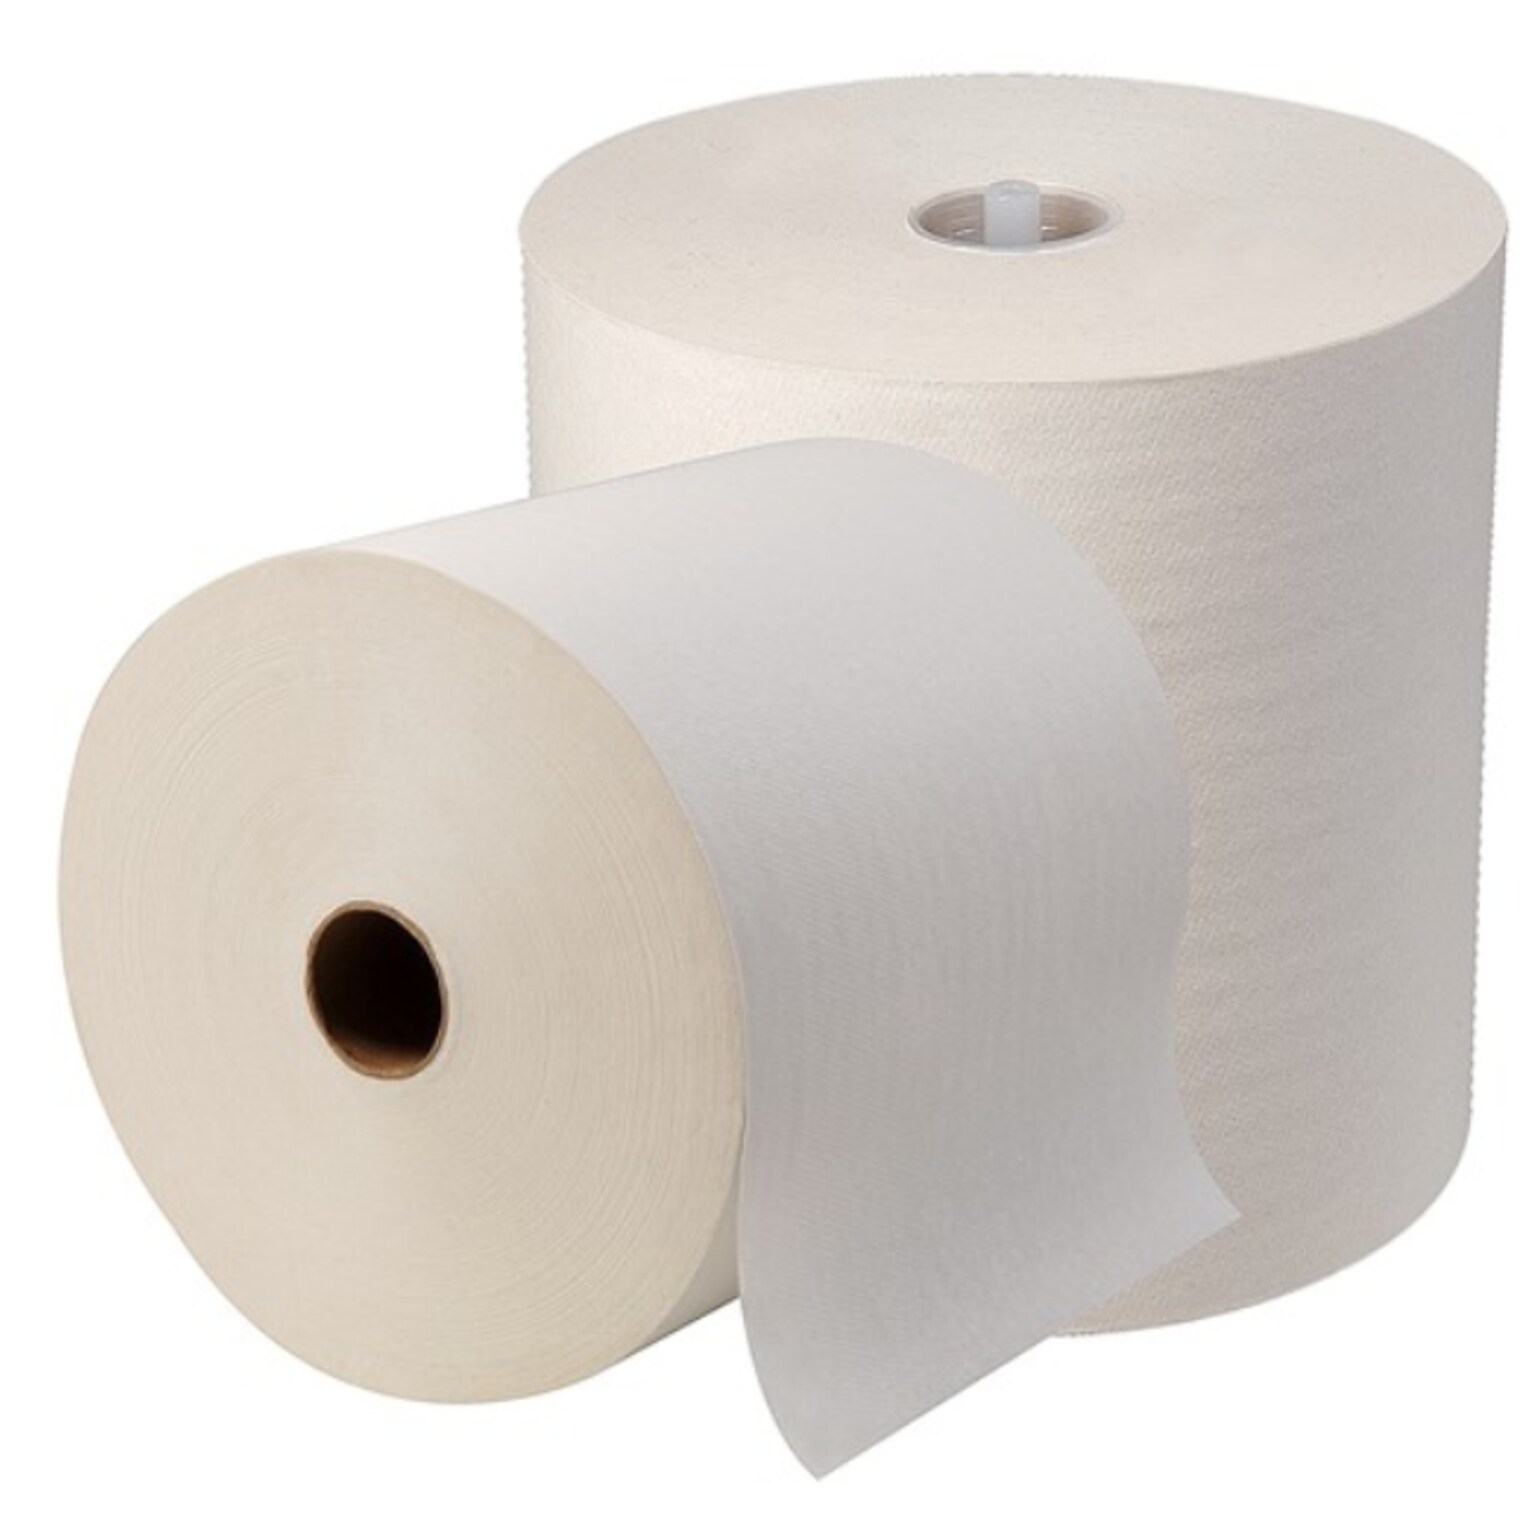 Georgia-Pacific Sofpull High-Capacity Hardwound Paper Towel, 1-Ply, White, 1000/Roll, 6 Rolls/Carton (26470)